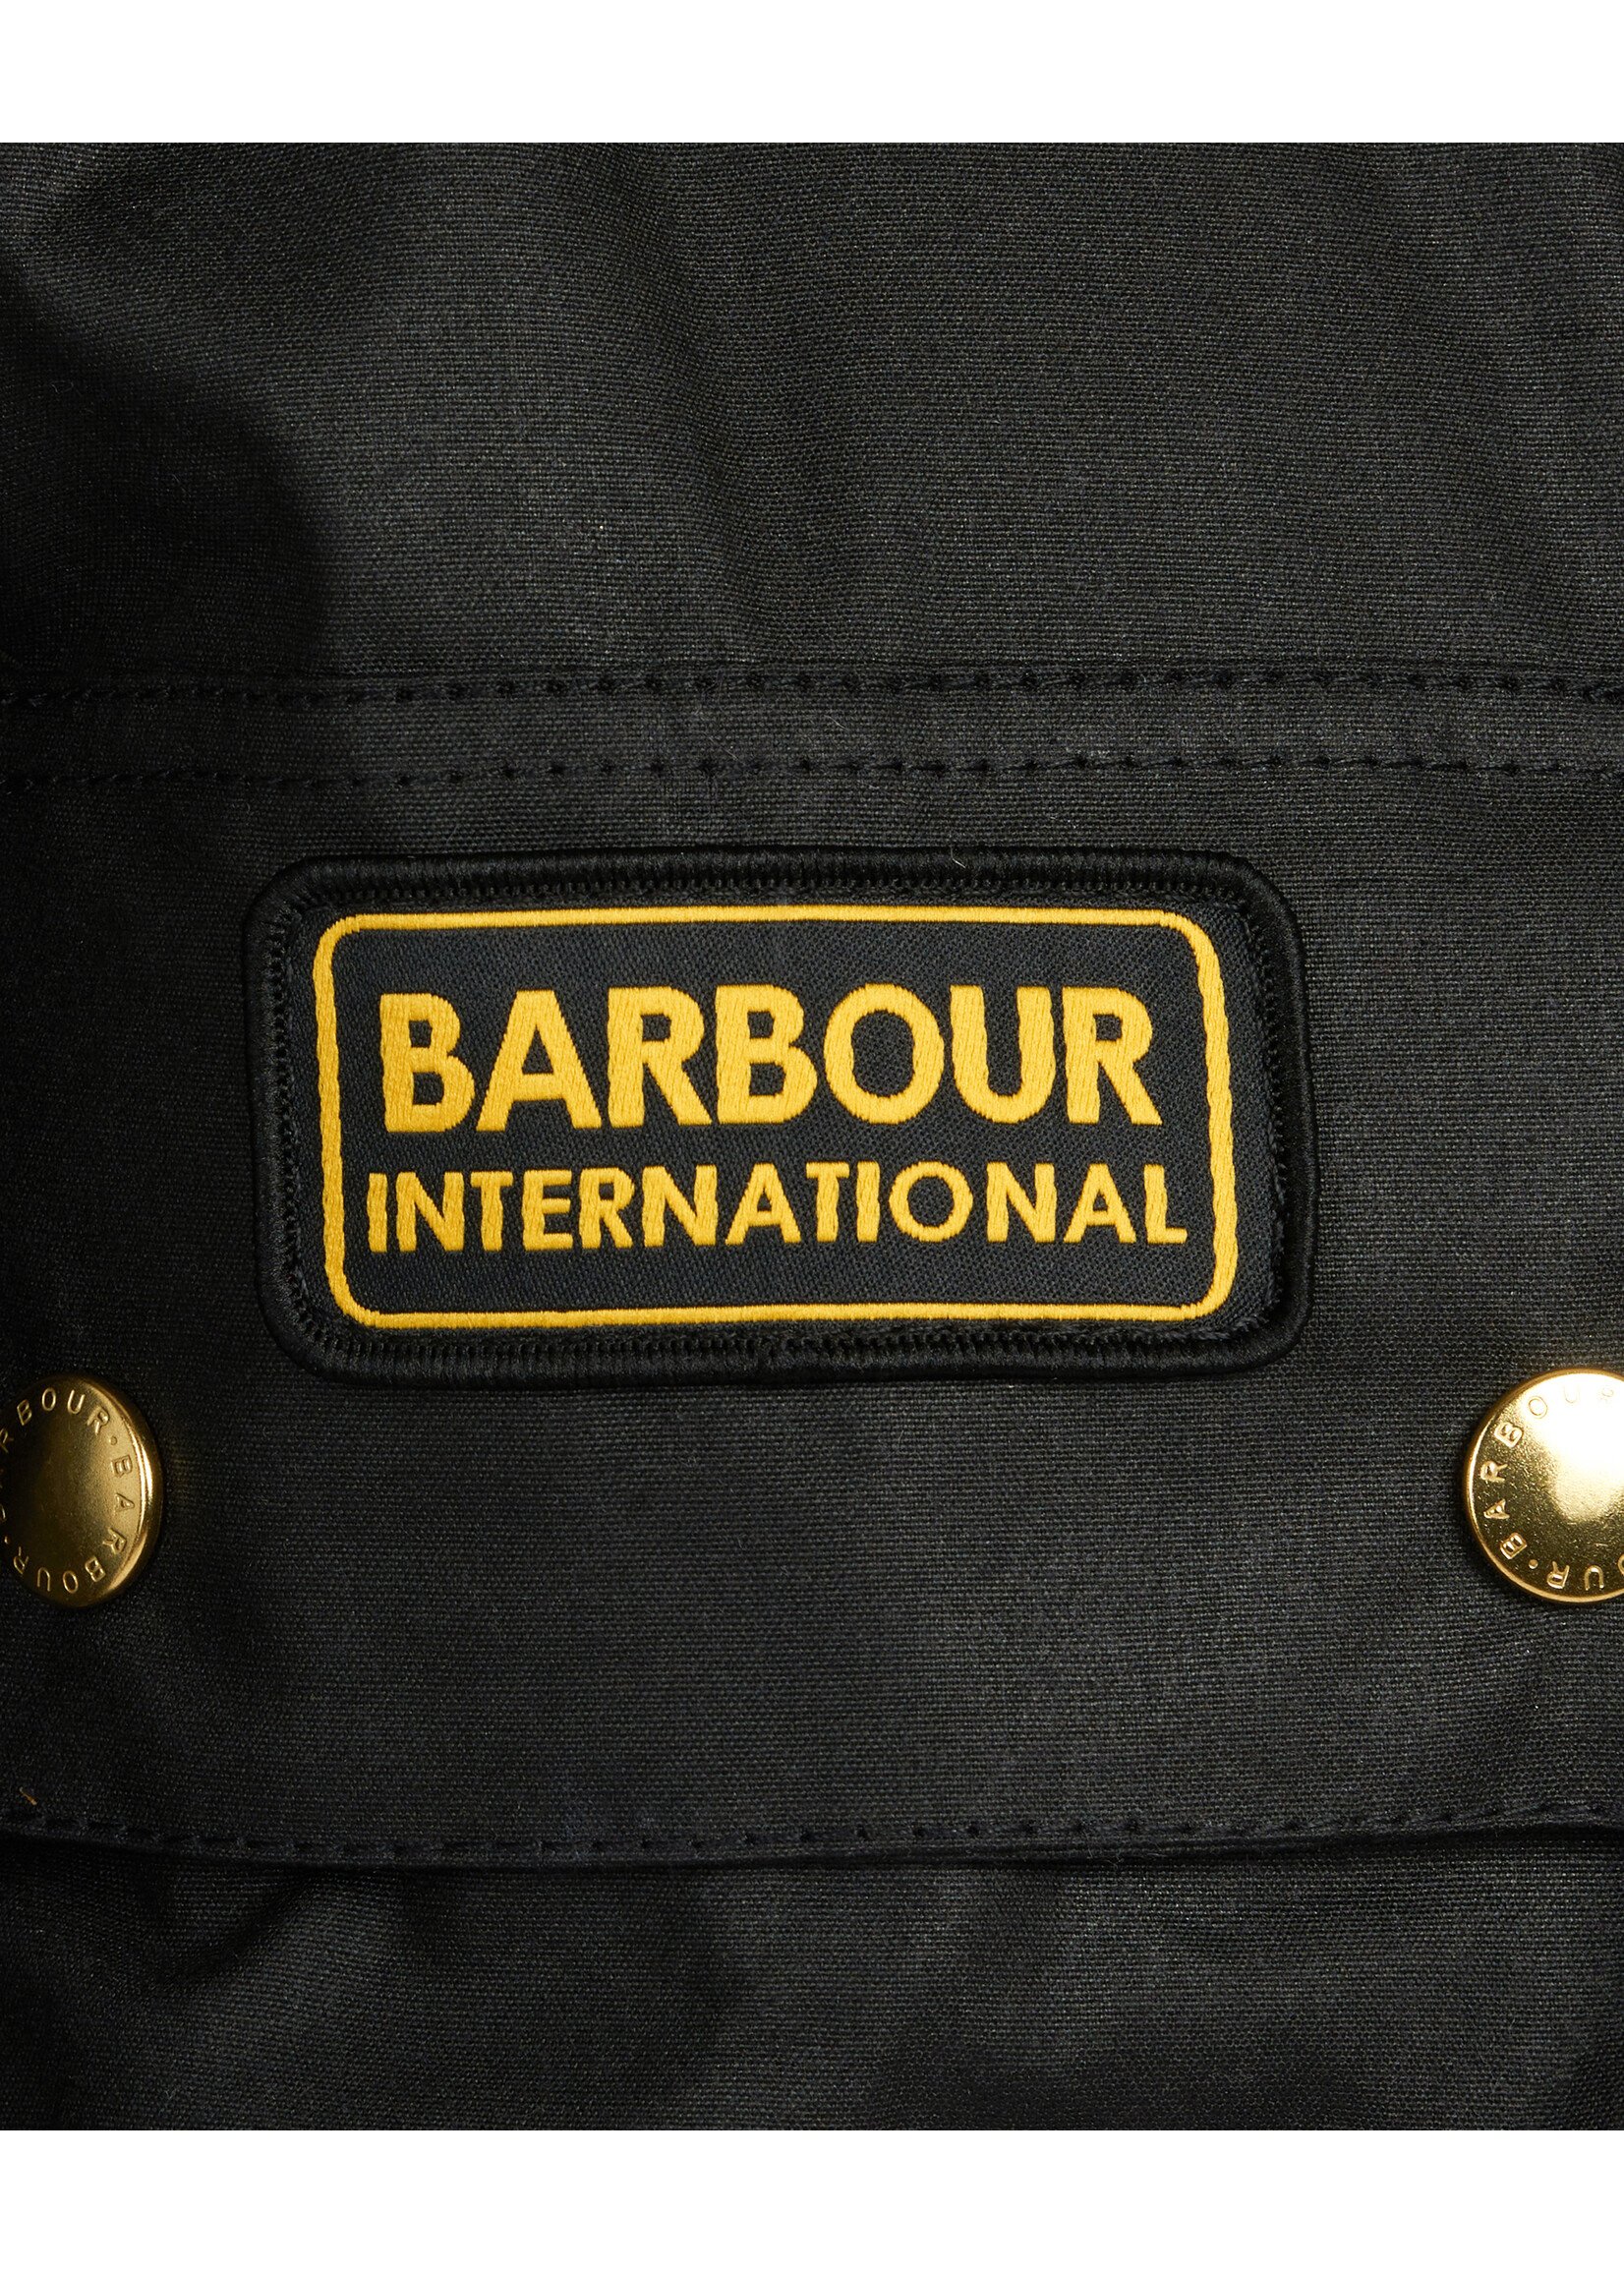 Barbour BARBOUR INTERNATIONAL ORIGINAL WAXED JACKET